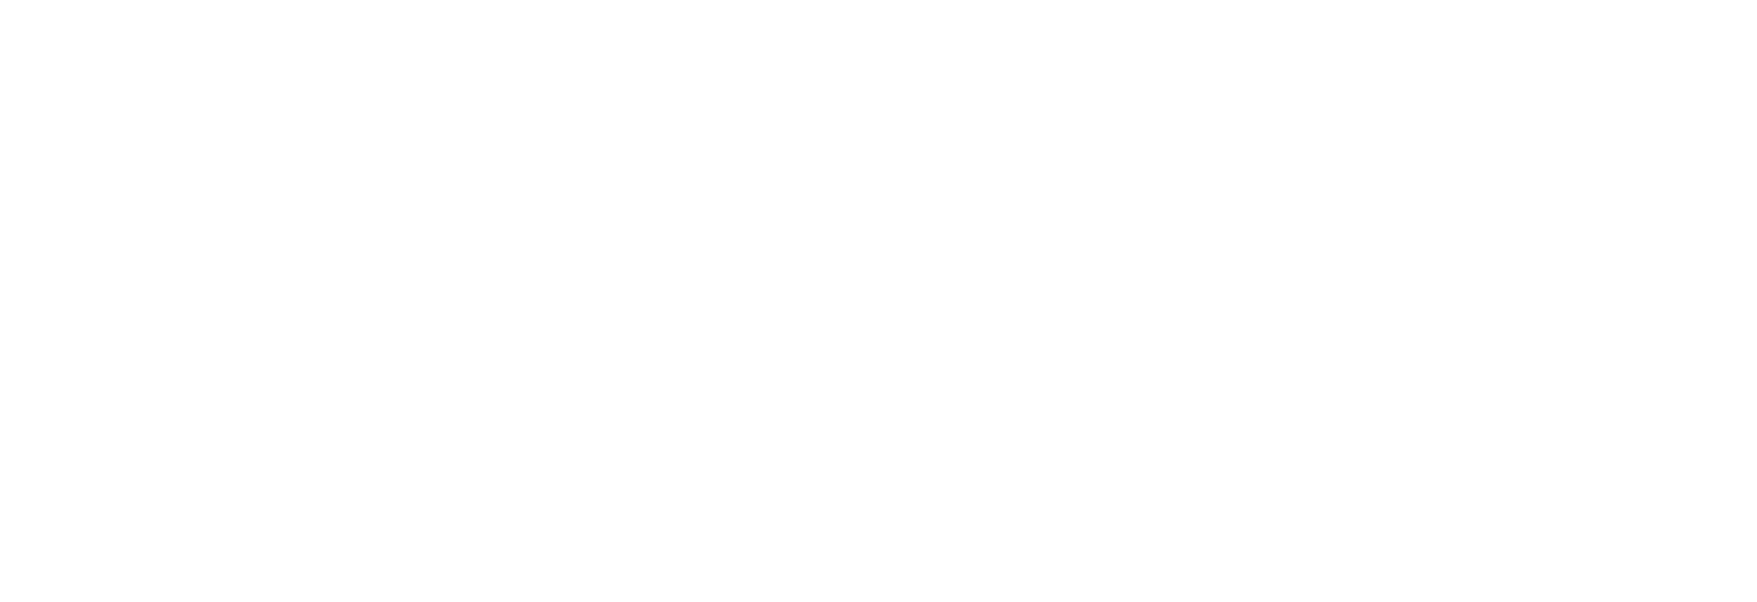 arcademia sinfonica logo